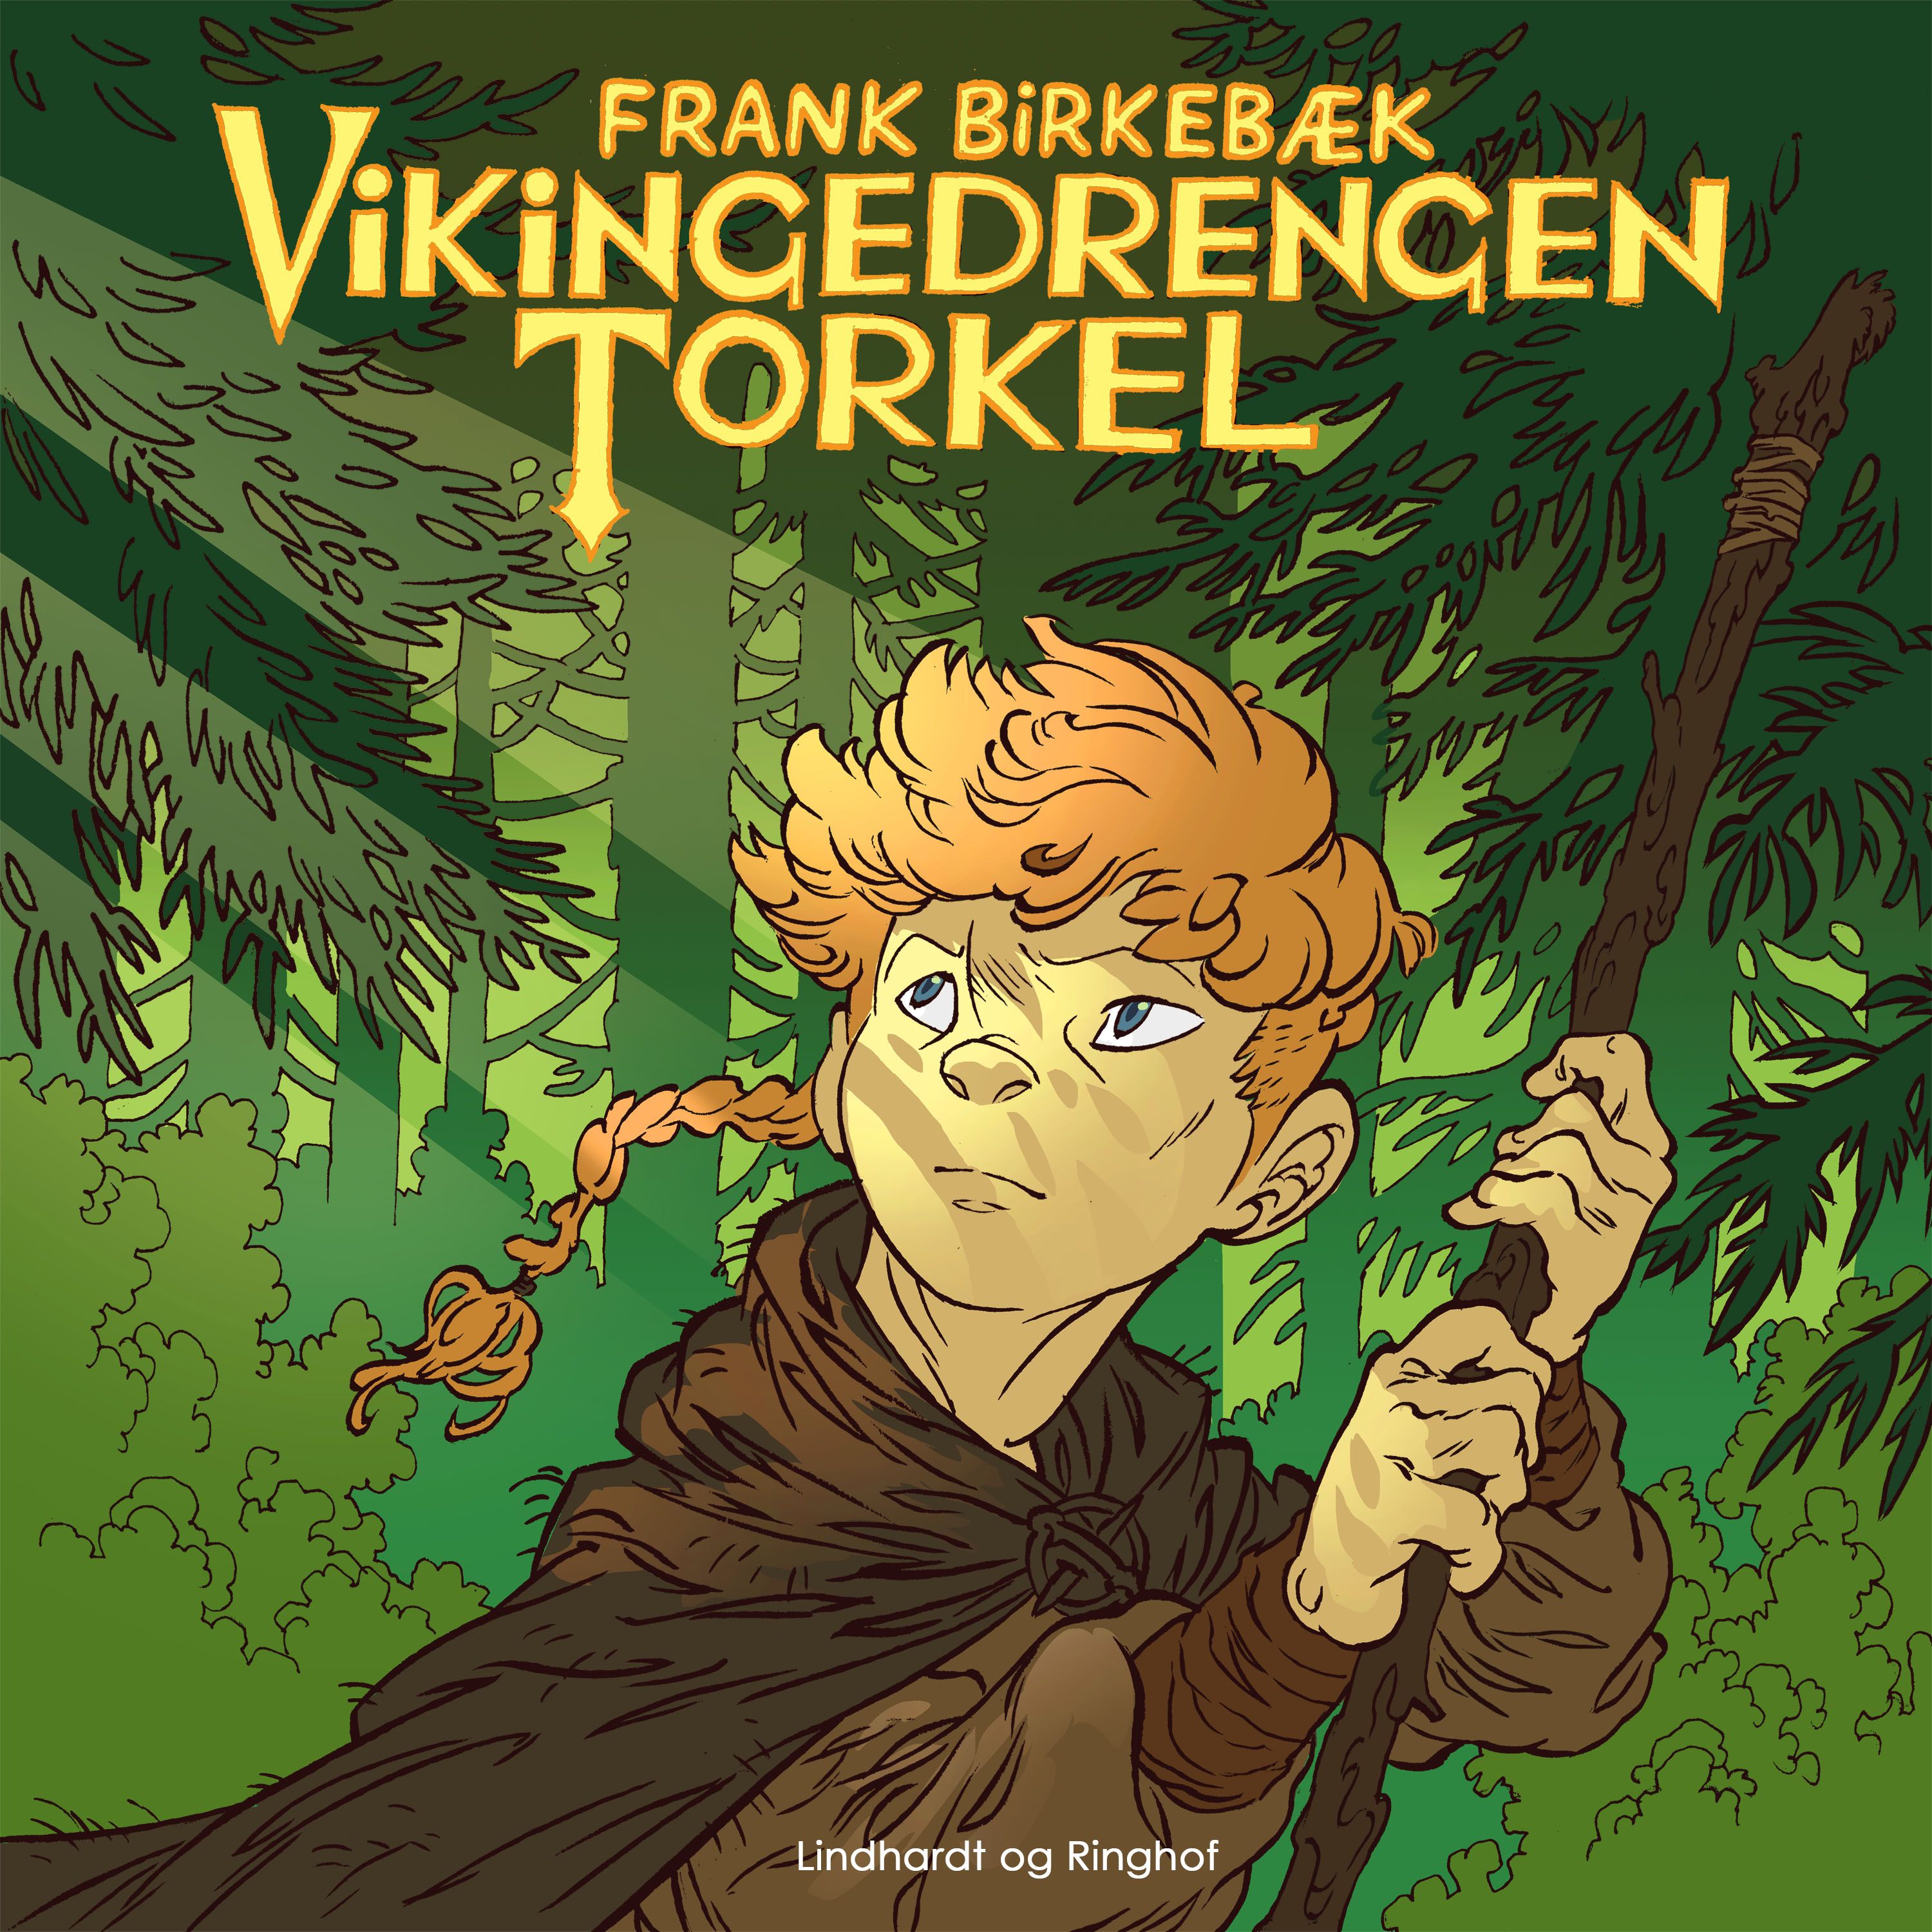 Vikingedrengen Torkel, ljudbok av Frank Birkebæk